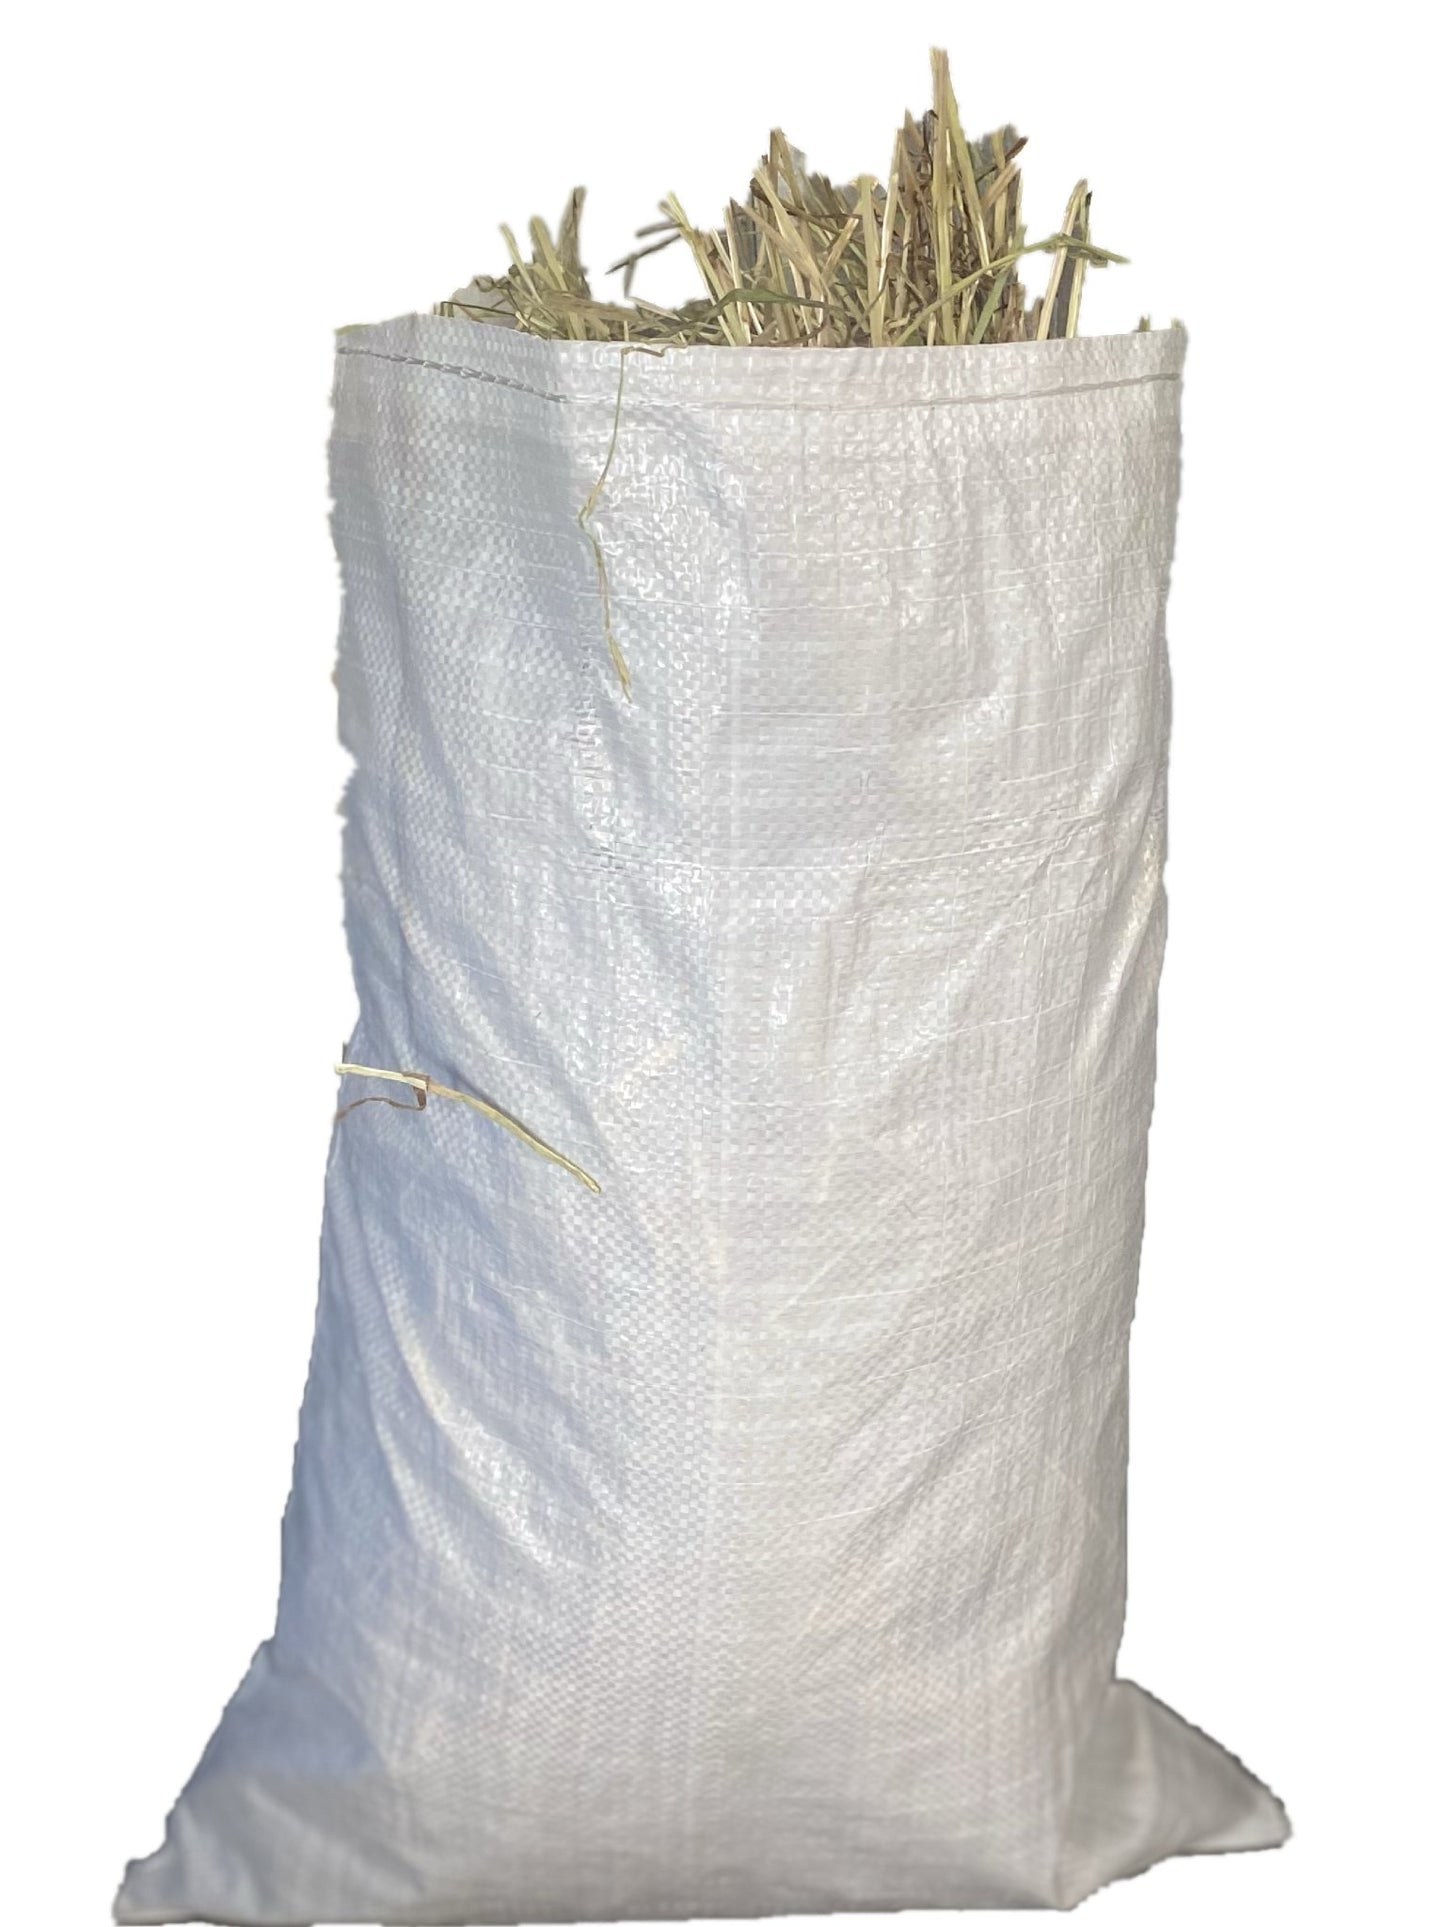 Bag of Meadow Hay - Woonona Petfood & Produce